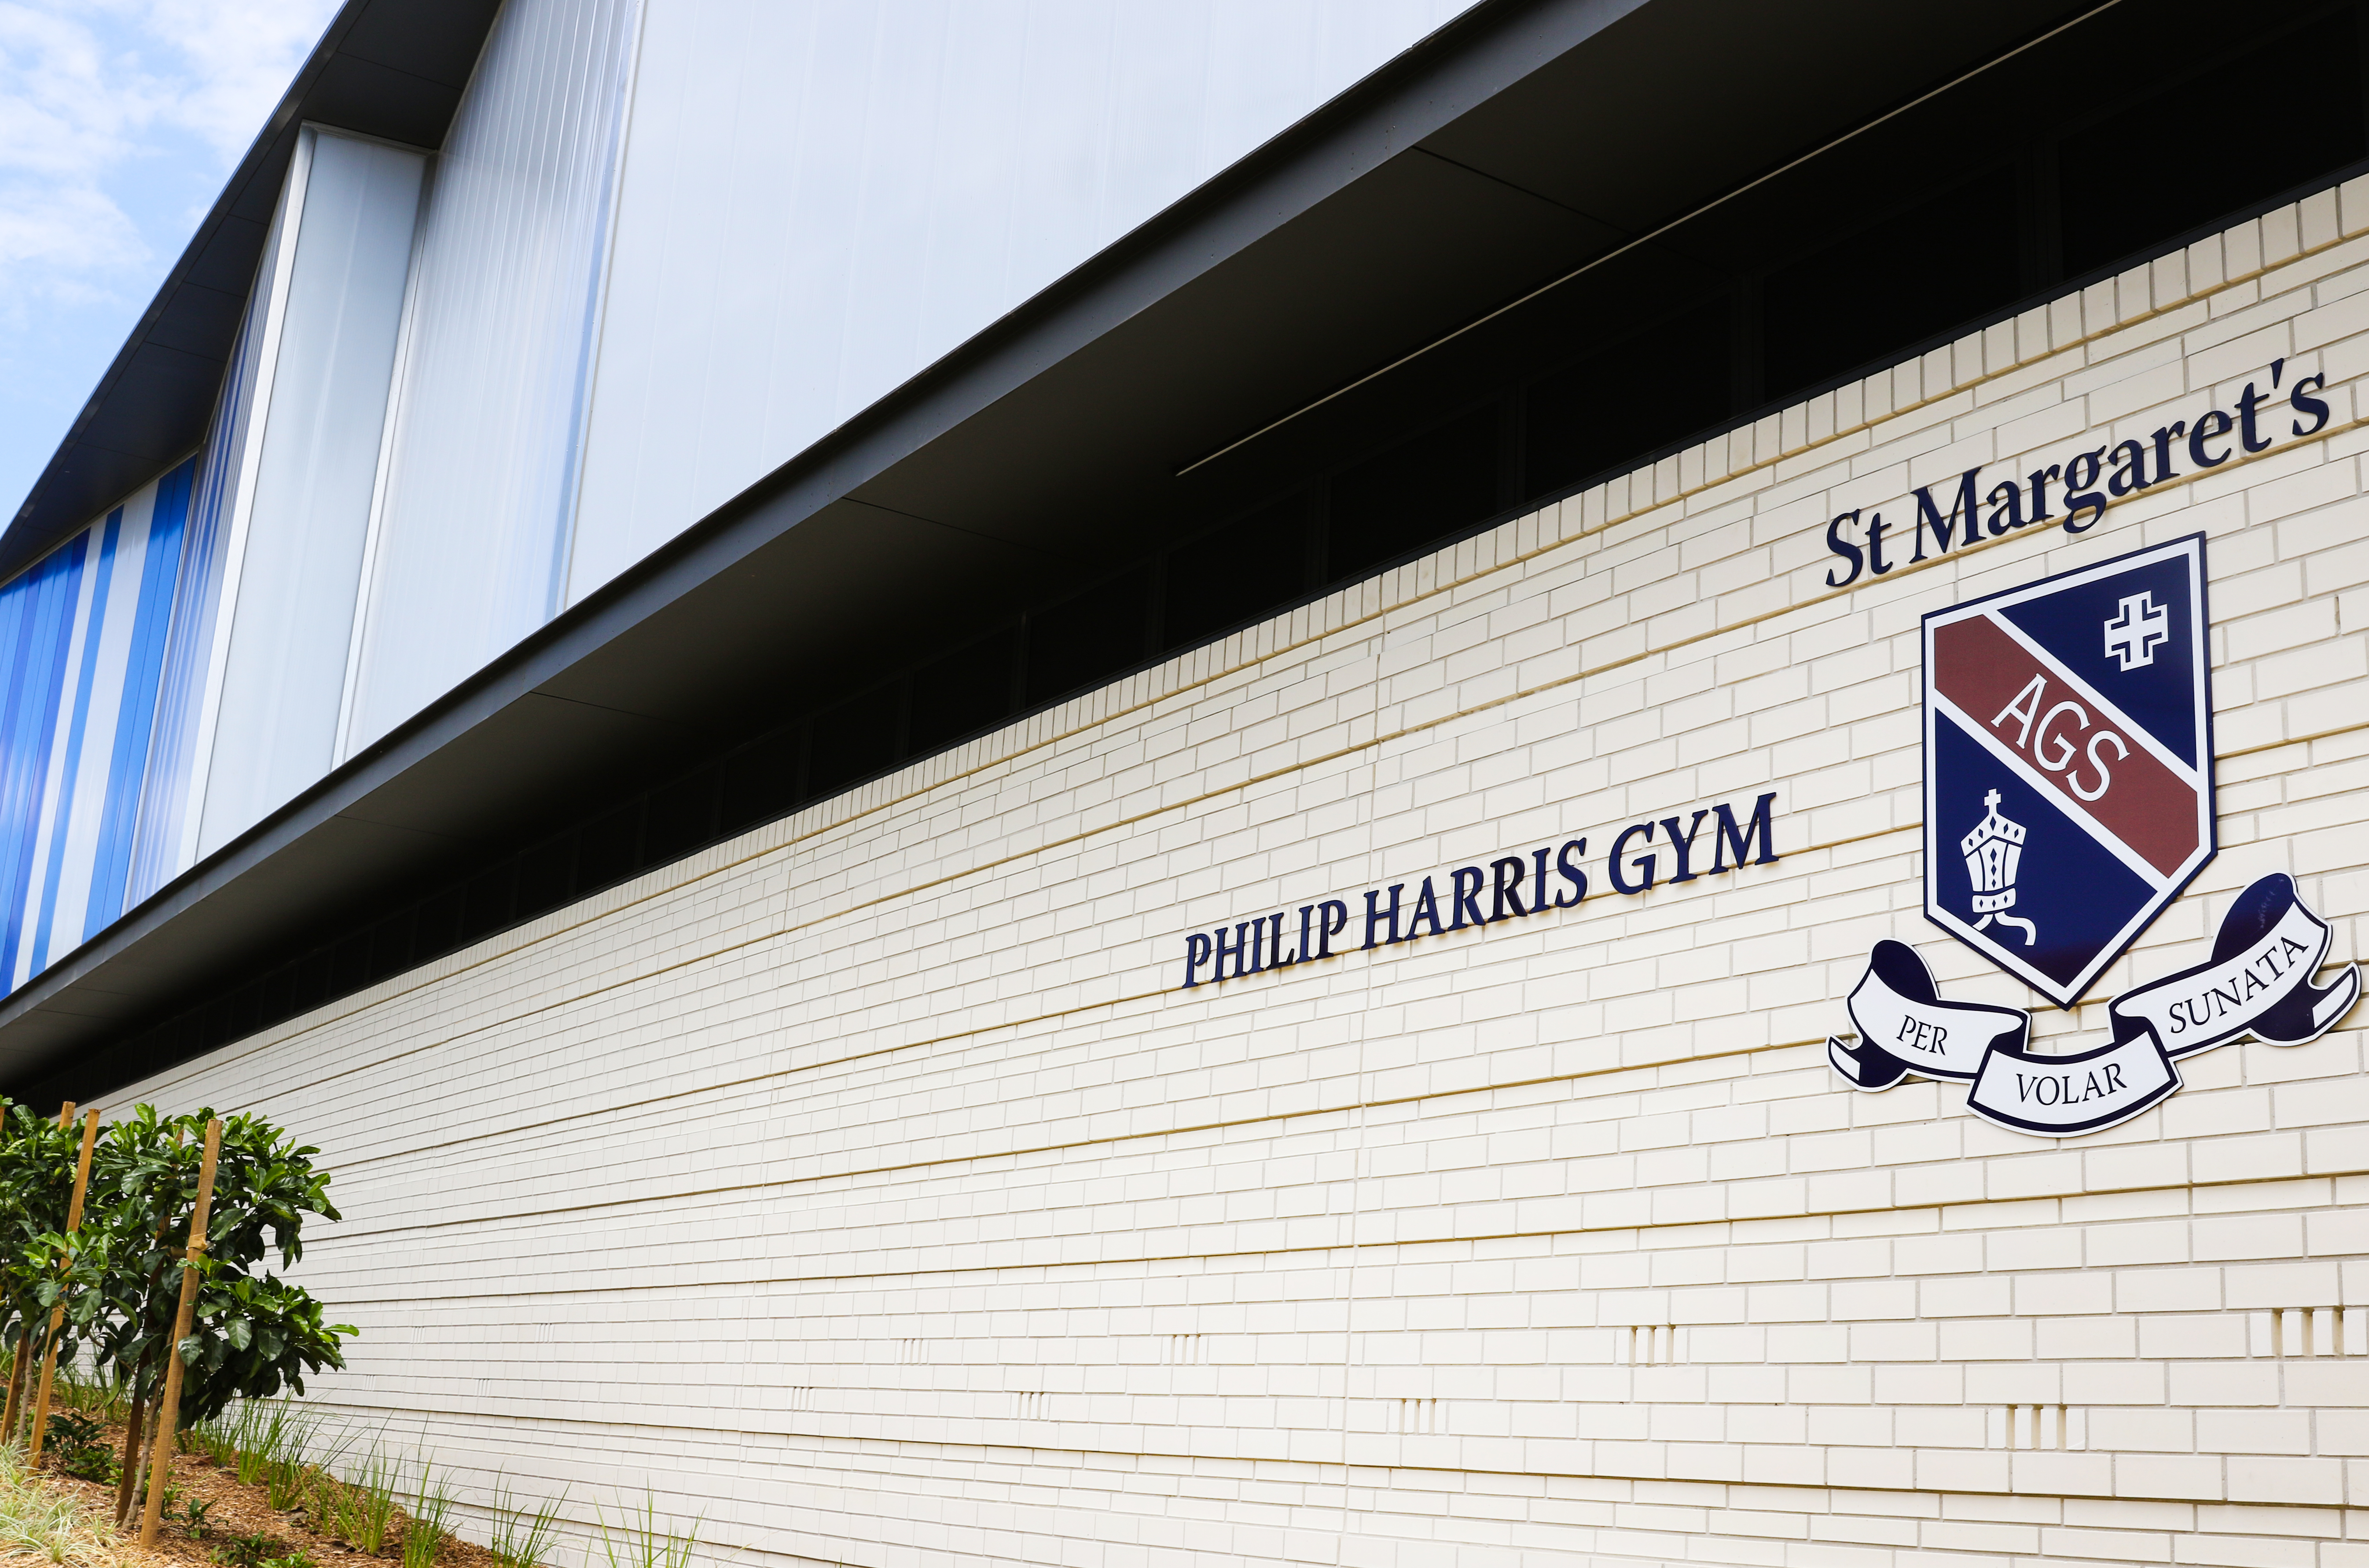 Philip Harris Gym